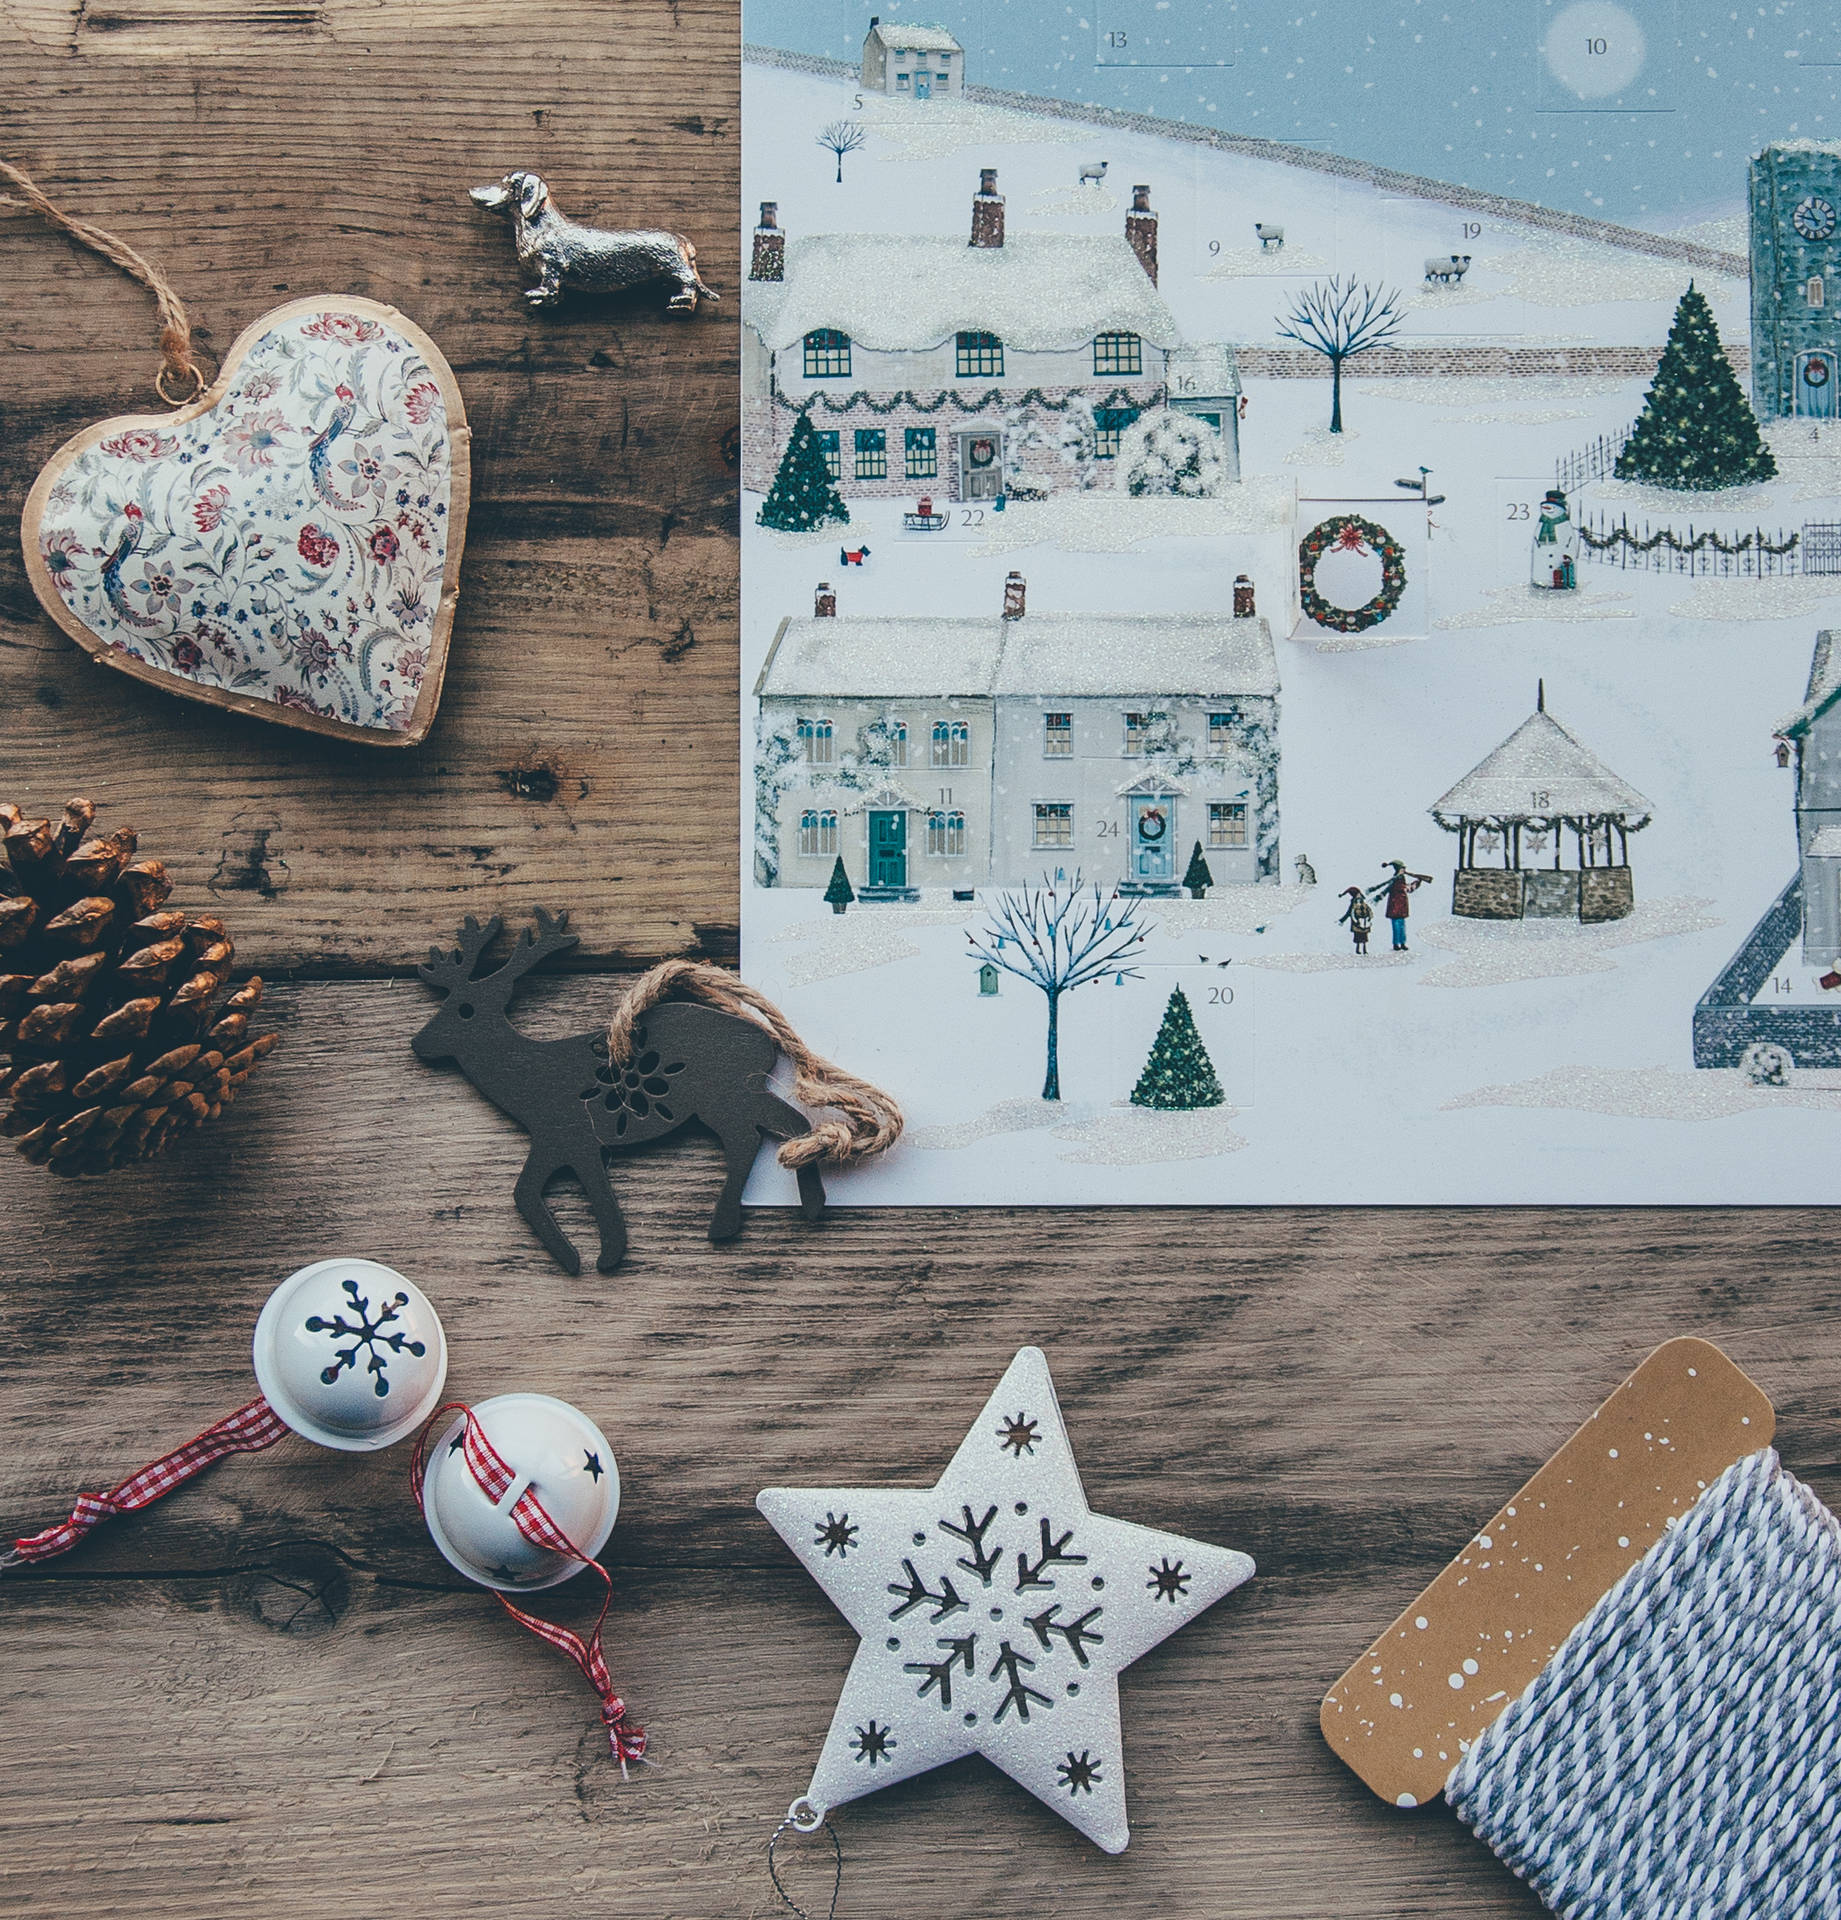 “Deck the halls with holiday cheer this Christmas season!” Wallpaper